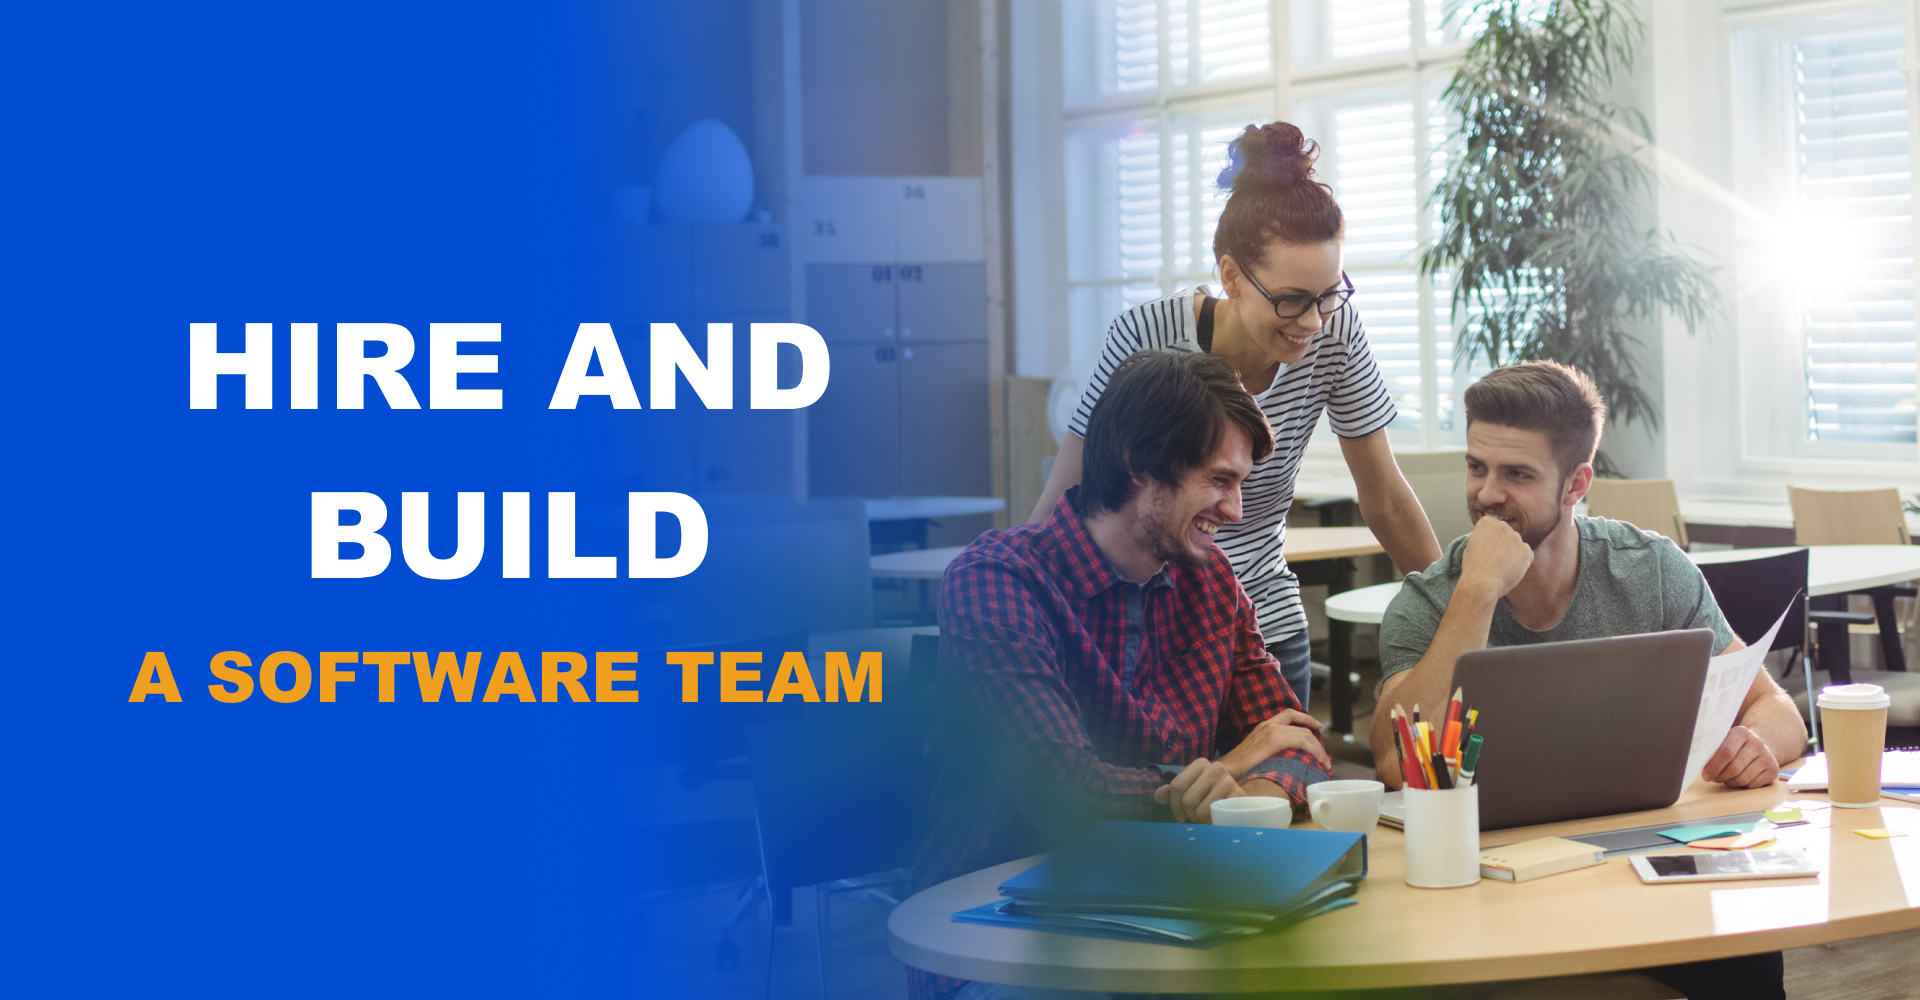 Hiring the ideal software team